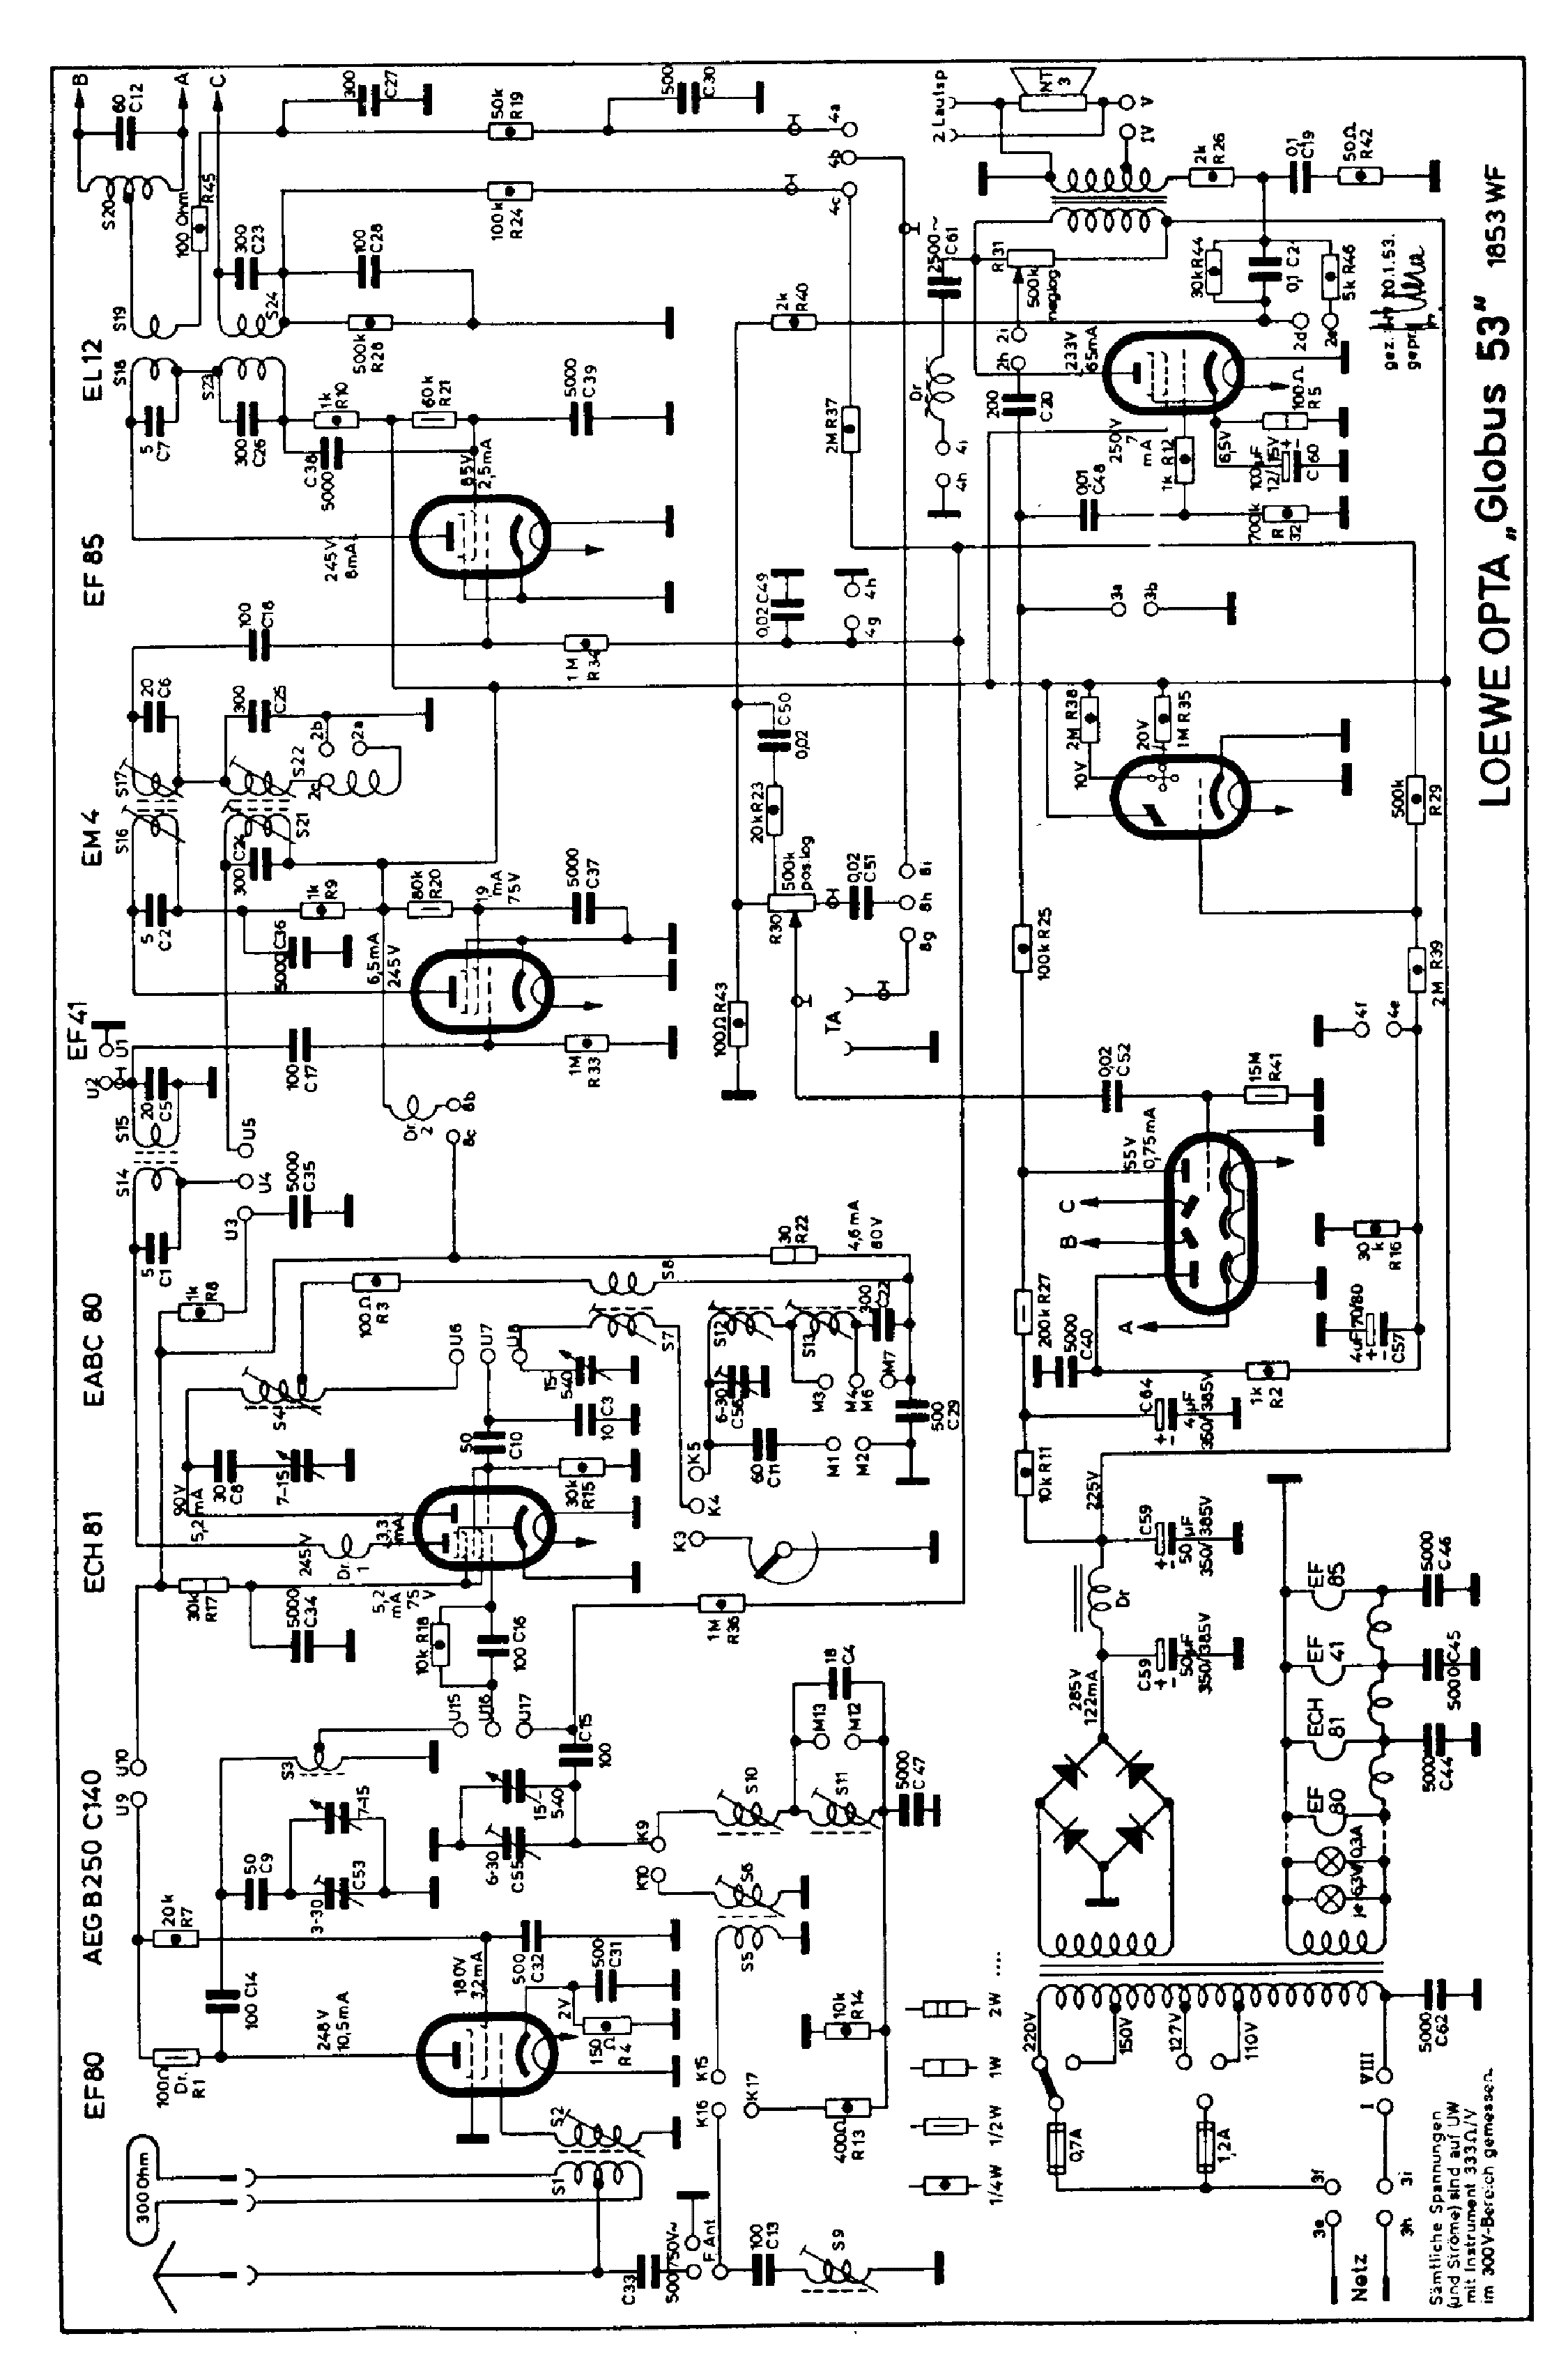 LOEWEOPTA 1853WF GLOBUS-53 AM-FM RECEIVER SCH service manual (2nd page)